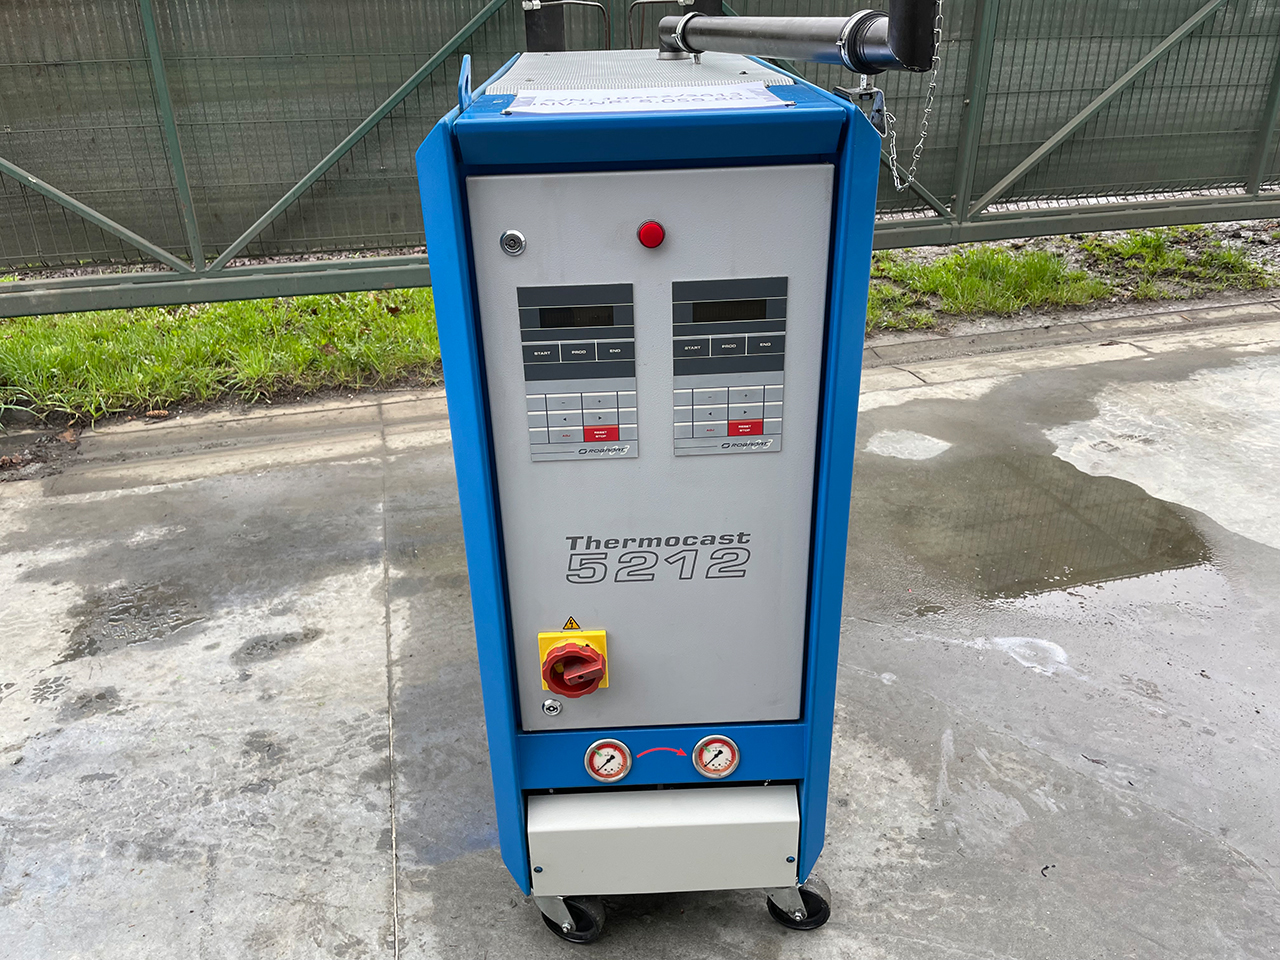 Robamat Thermocast 5212 oil temperature control unit ZU2226, used